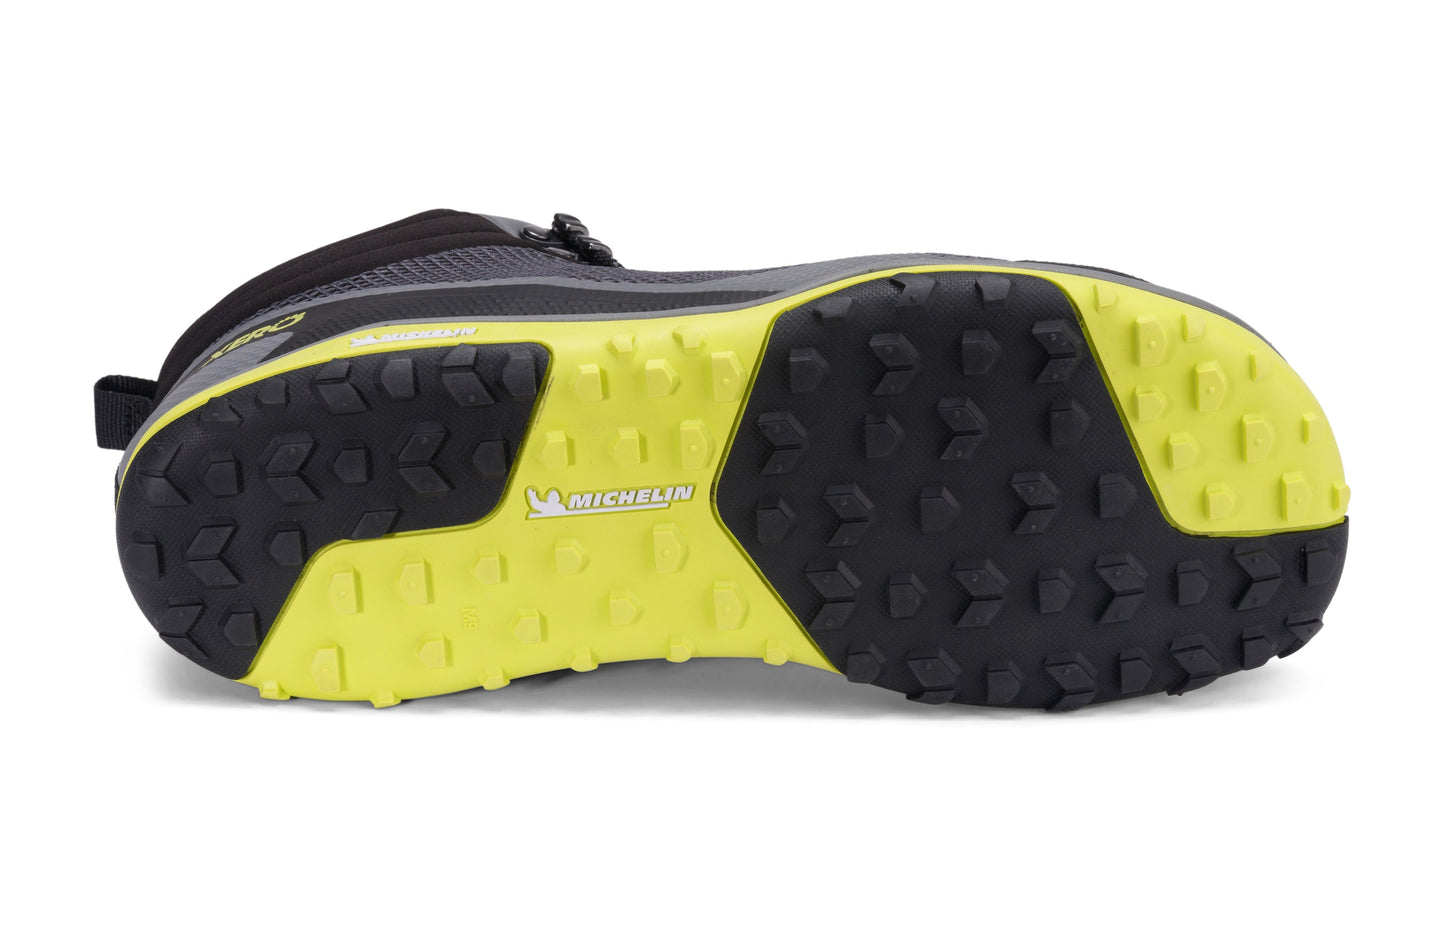 Xero Shoes Scrambler Mid Mens barfods lette vandrestøvler til mænd i farven steel gray / sulphur, saal